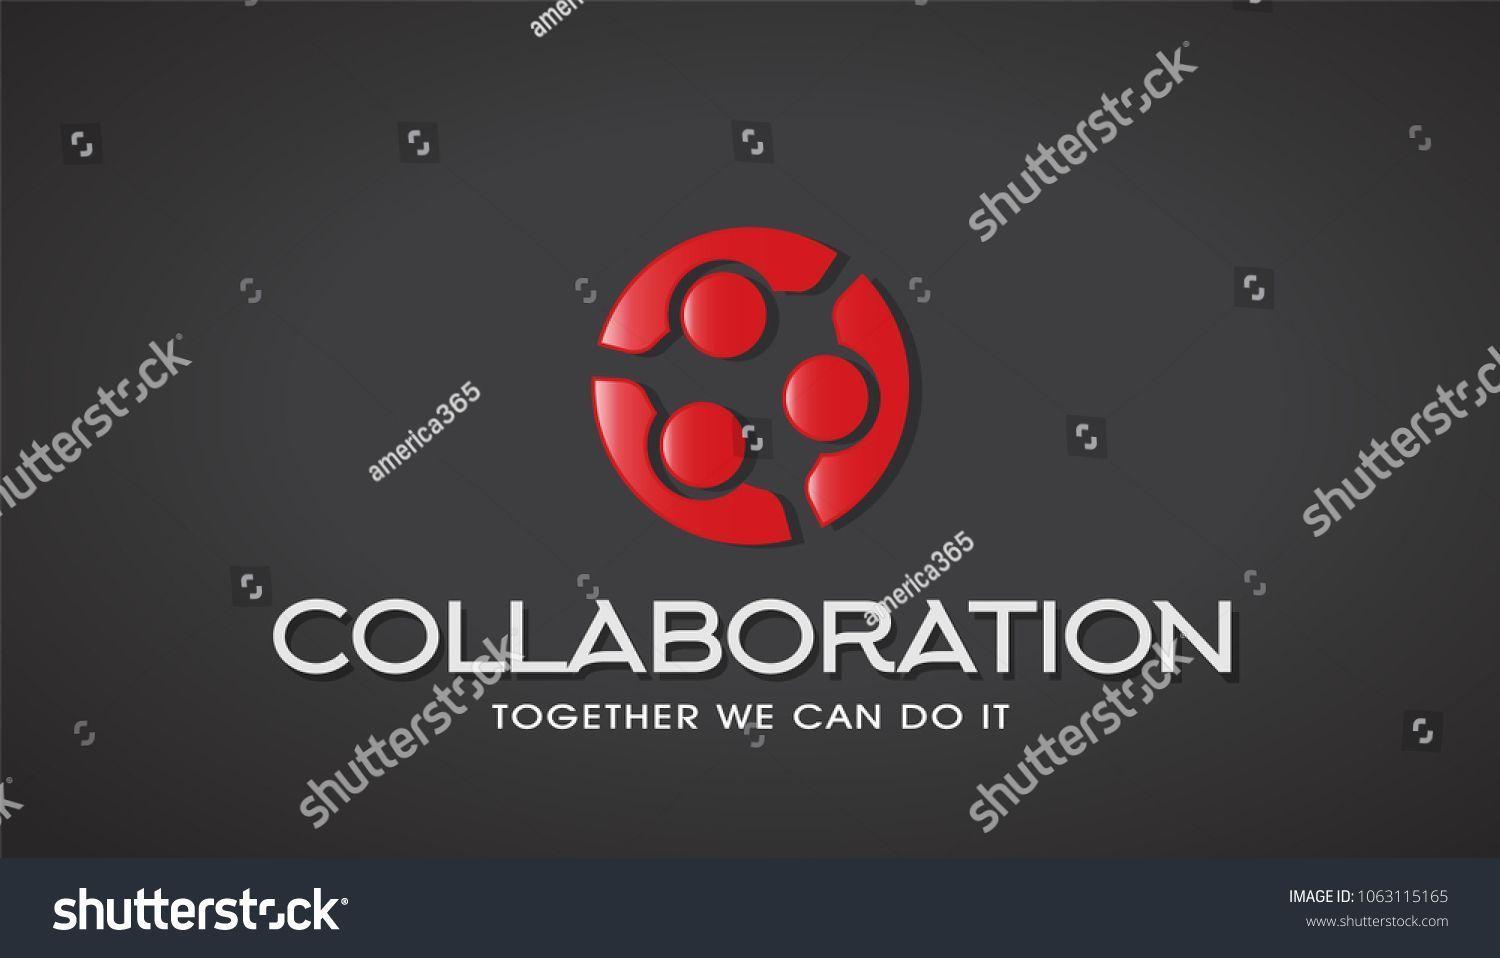 Three People Logo - Three People Collaboration. Concept of Teamwork #people #social